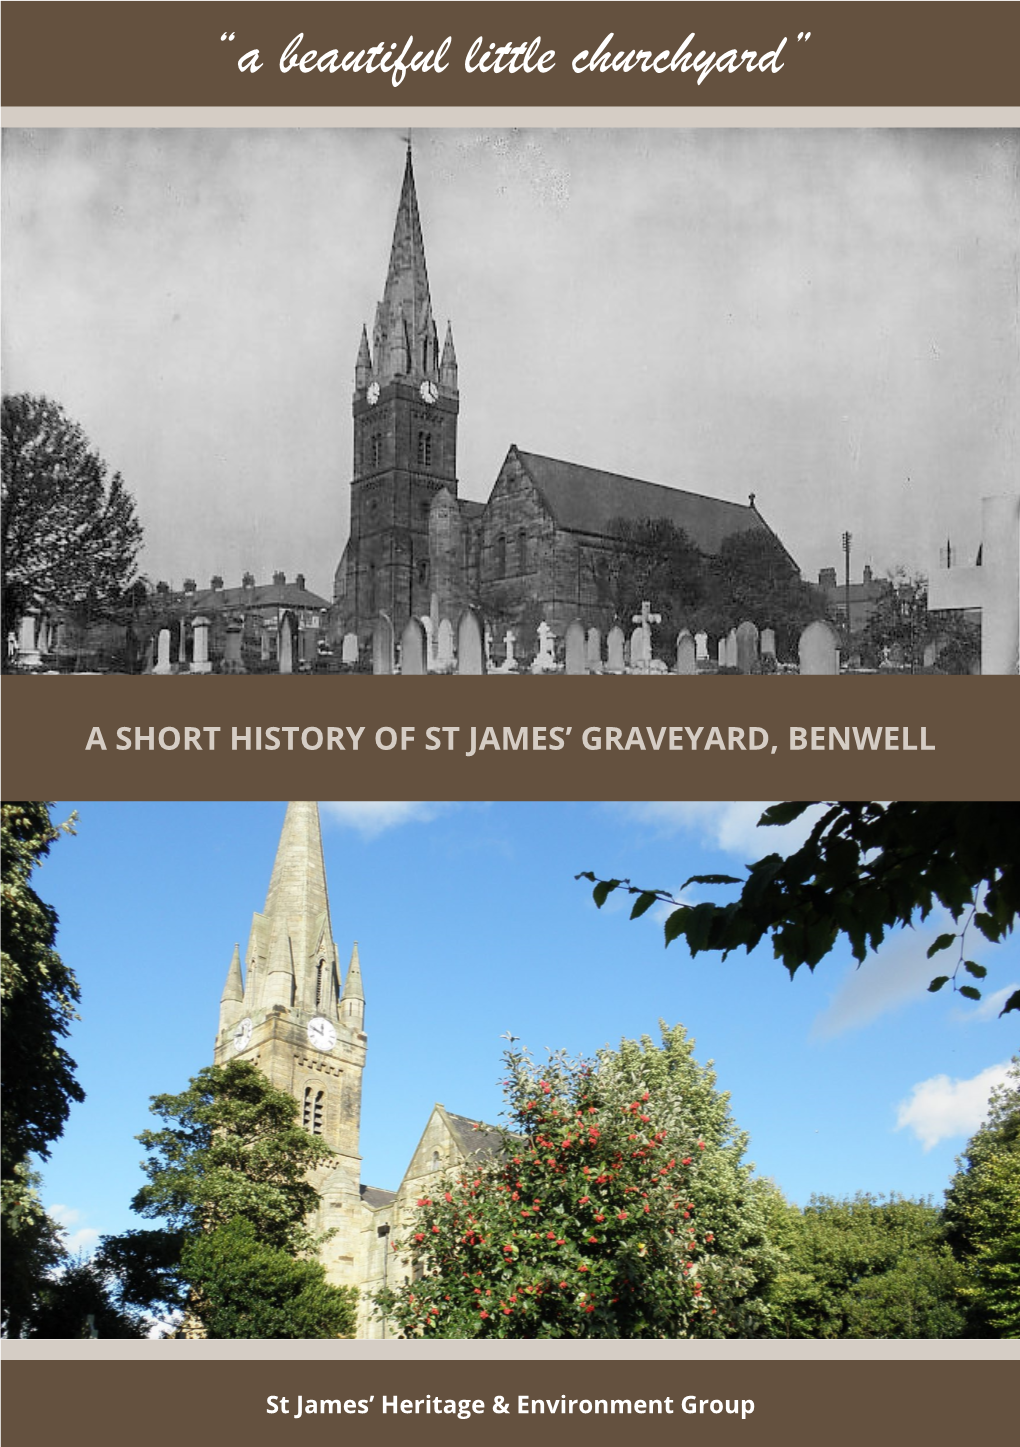 A Short History of St James' Graveyard, Benwell